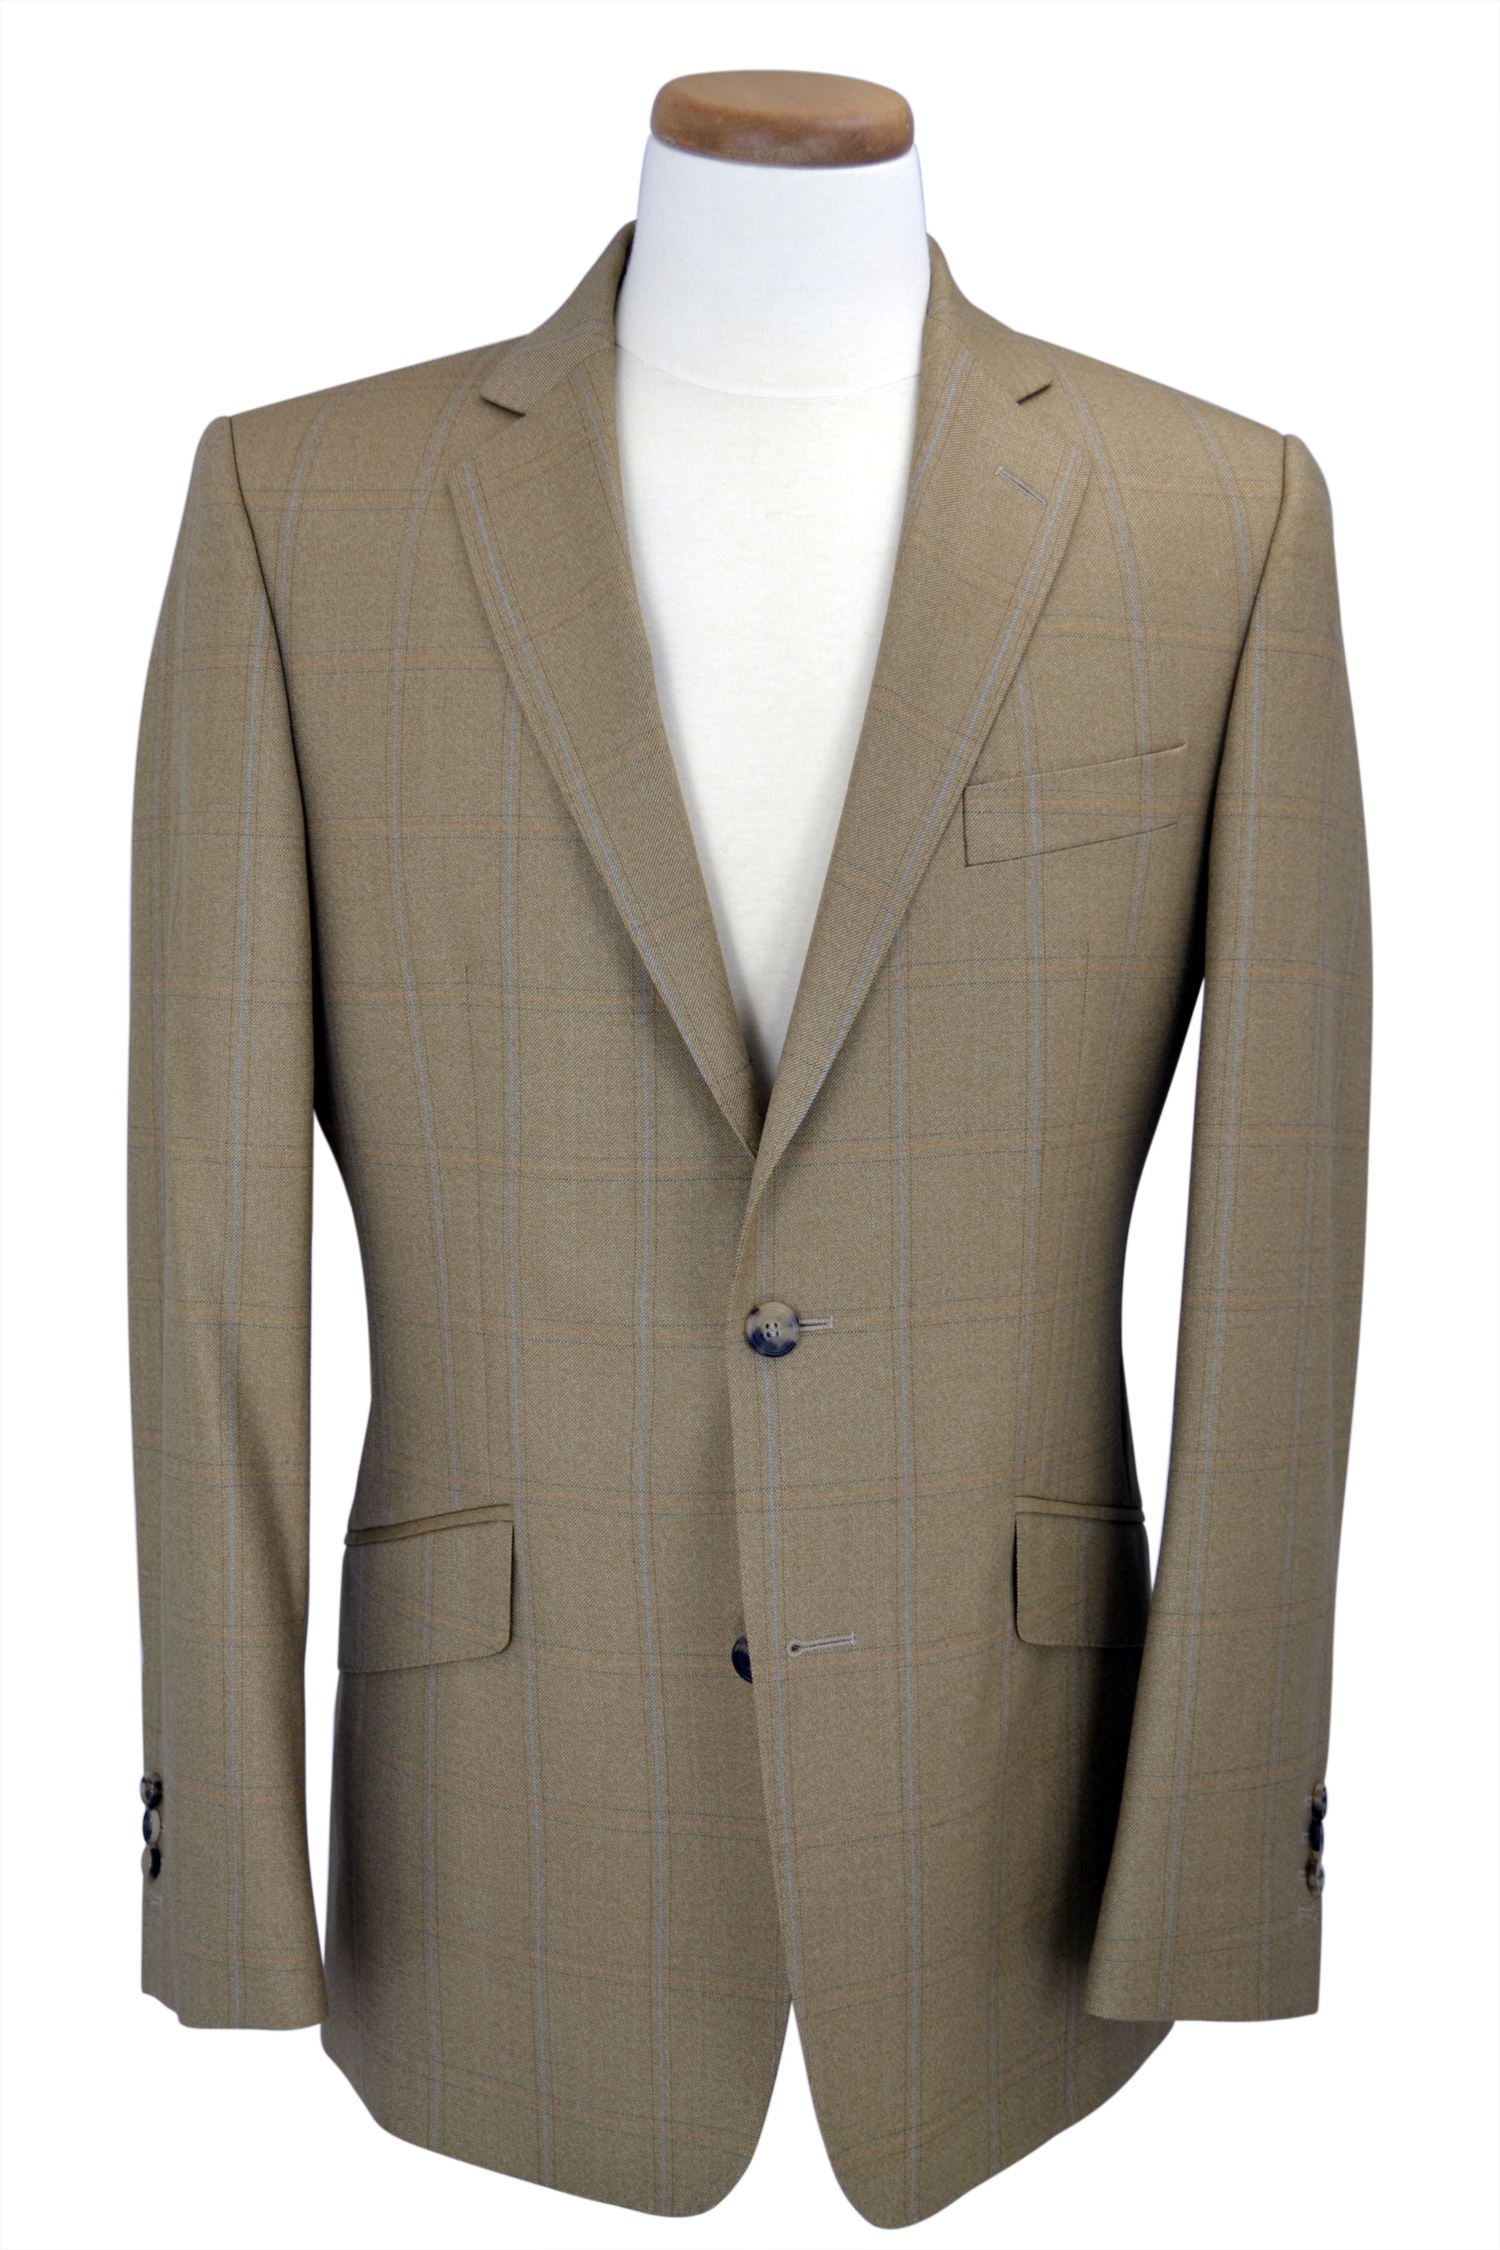 Mens' Jackets & Suits — C.D. Rigden & Son Country Classics